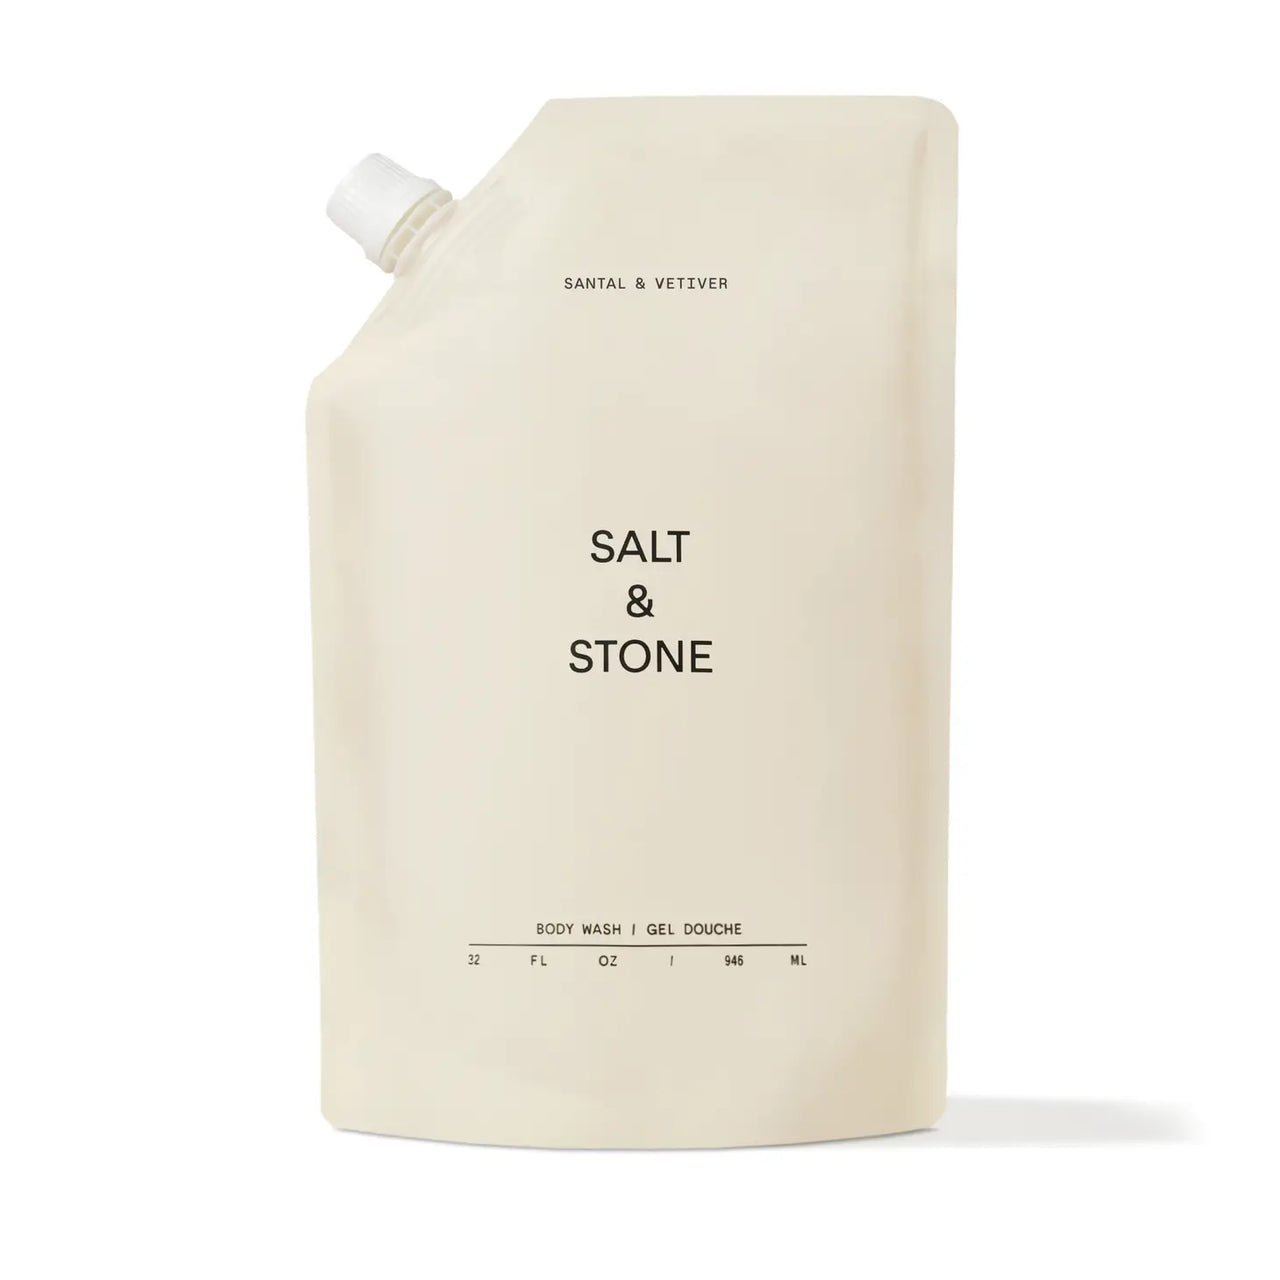 SALT AND STONE BODY WASH REFILL- SANTAL & VETIVER